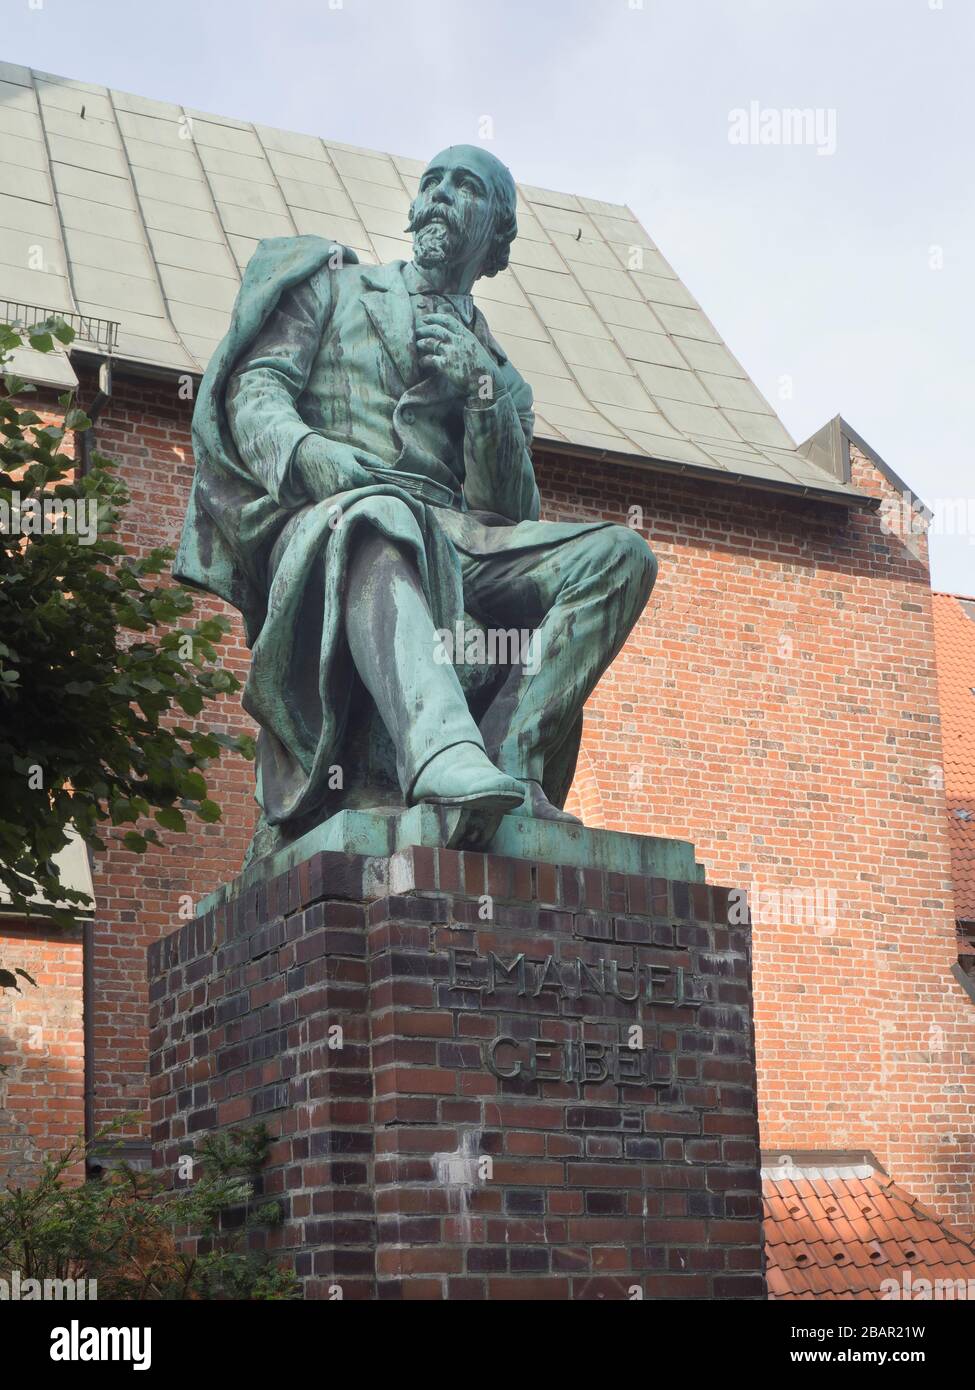 Statue comemorating the German poet Emanuel Geibel in Lübeck Germany Stock Photo